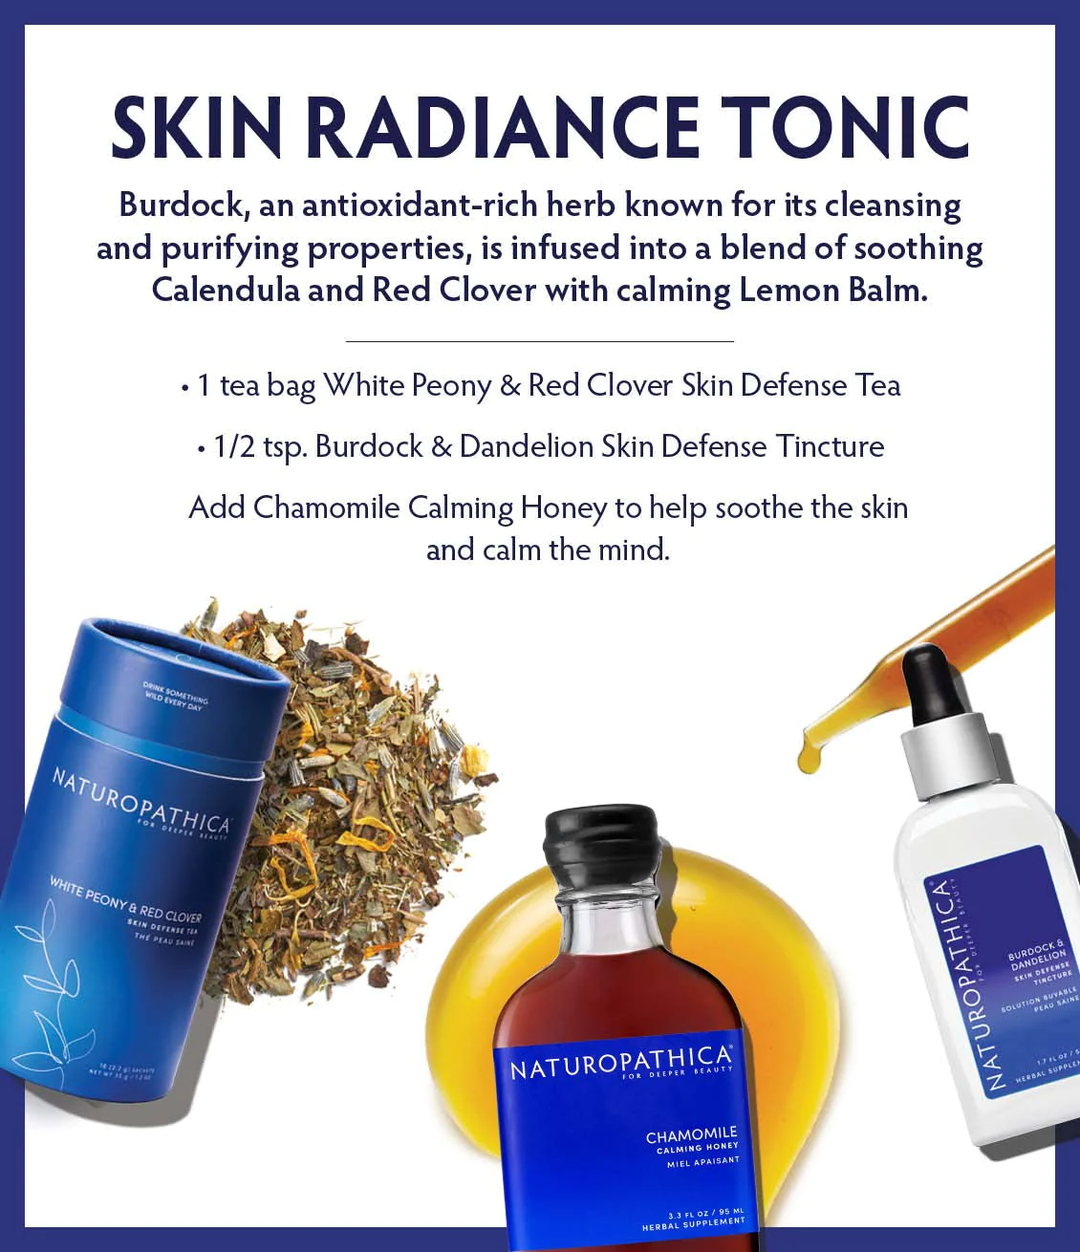 Naturopathica Burdock & Dandelion Skin Defense Tincture tonic